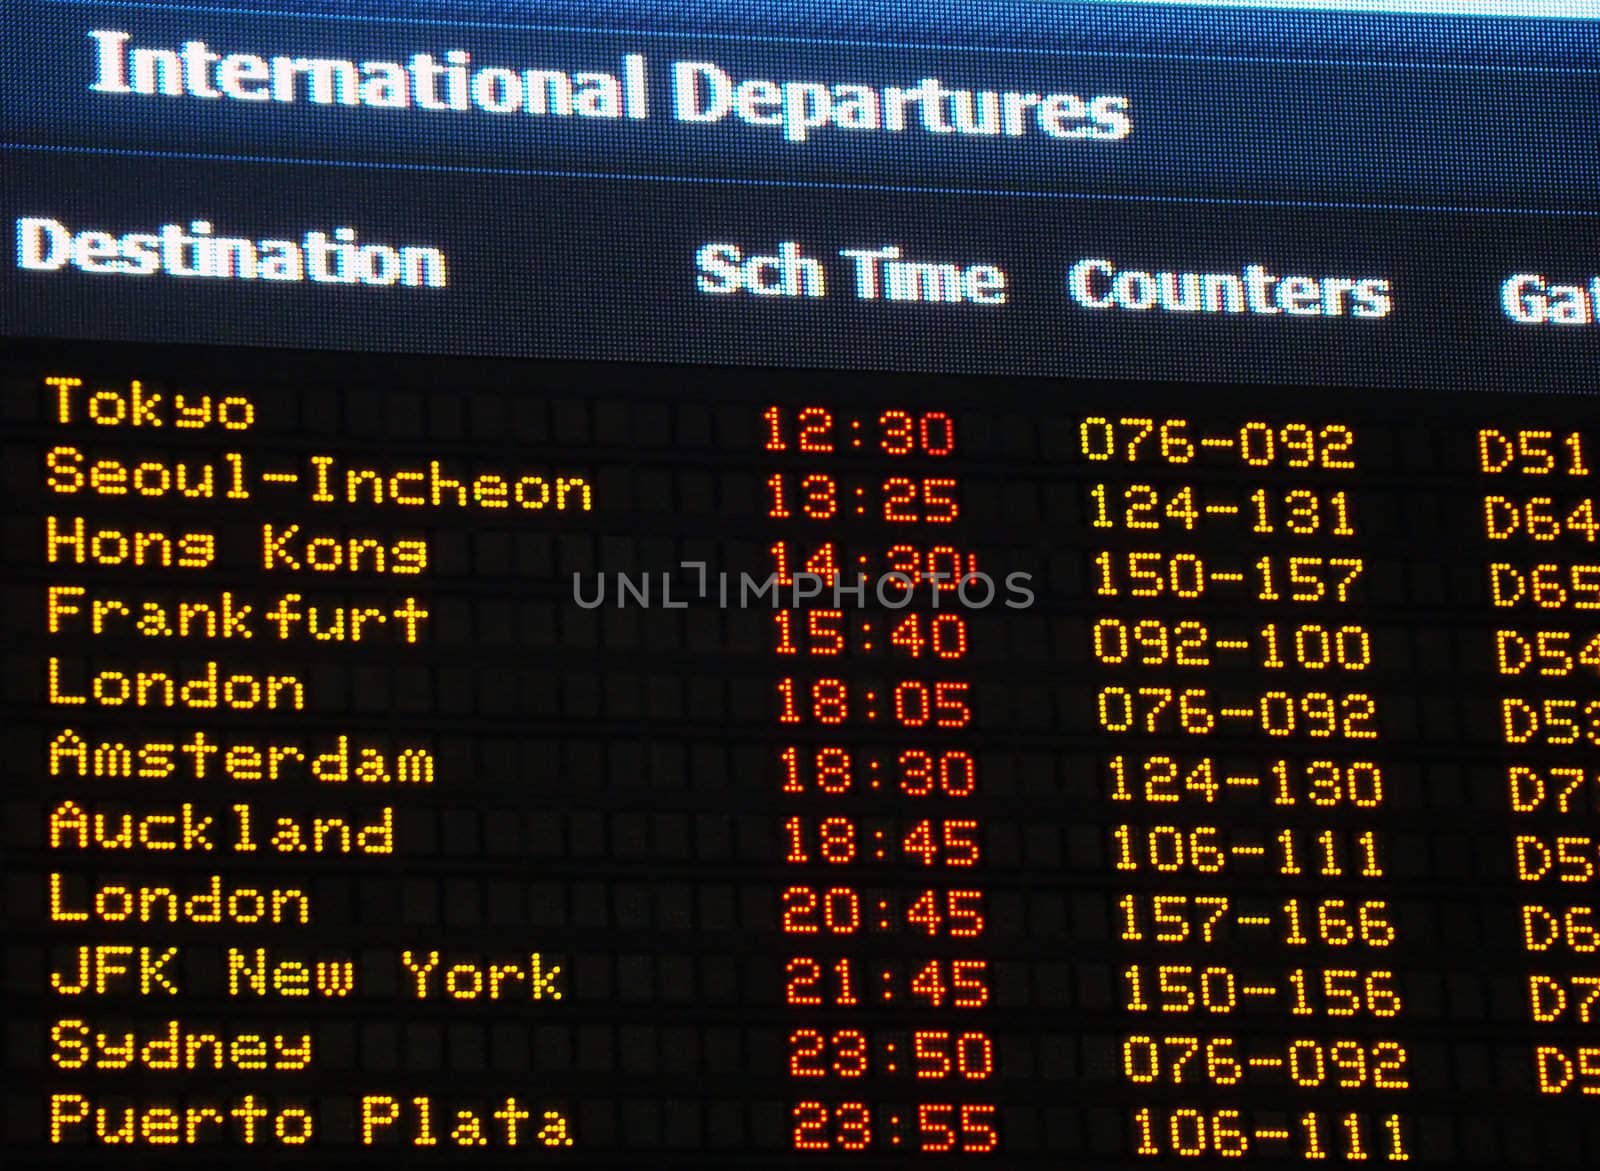 Canadian airport information board, international departures.